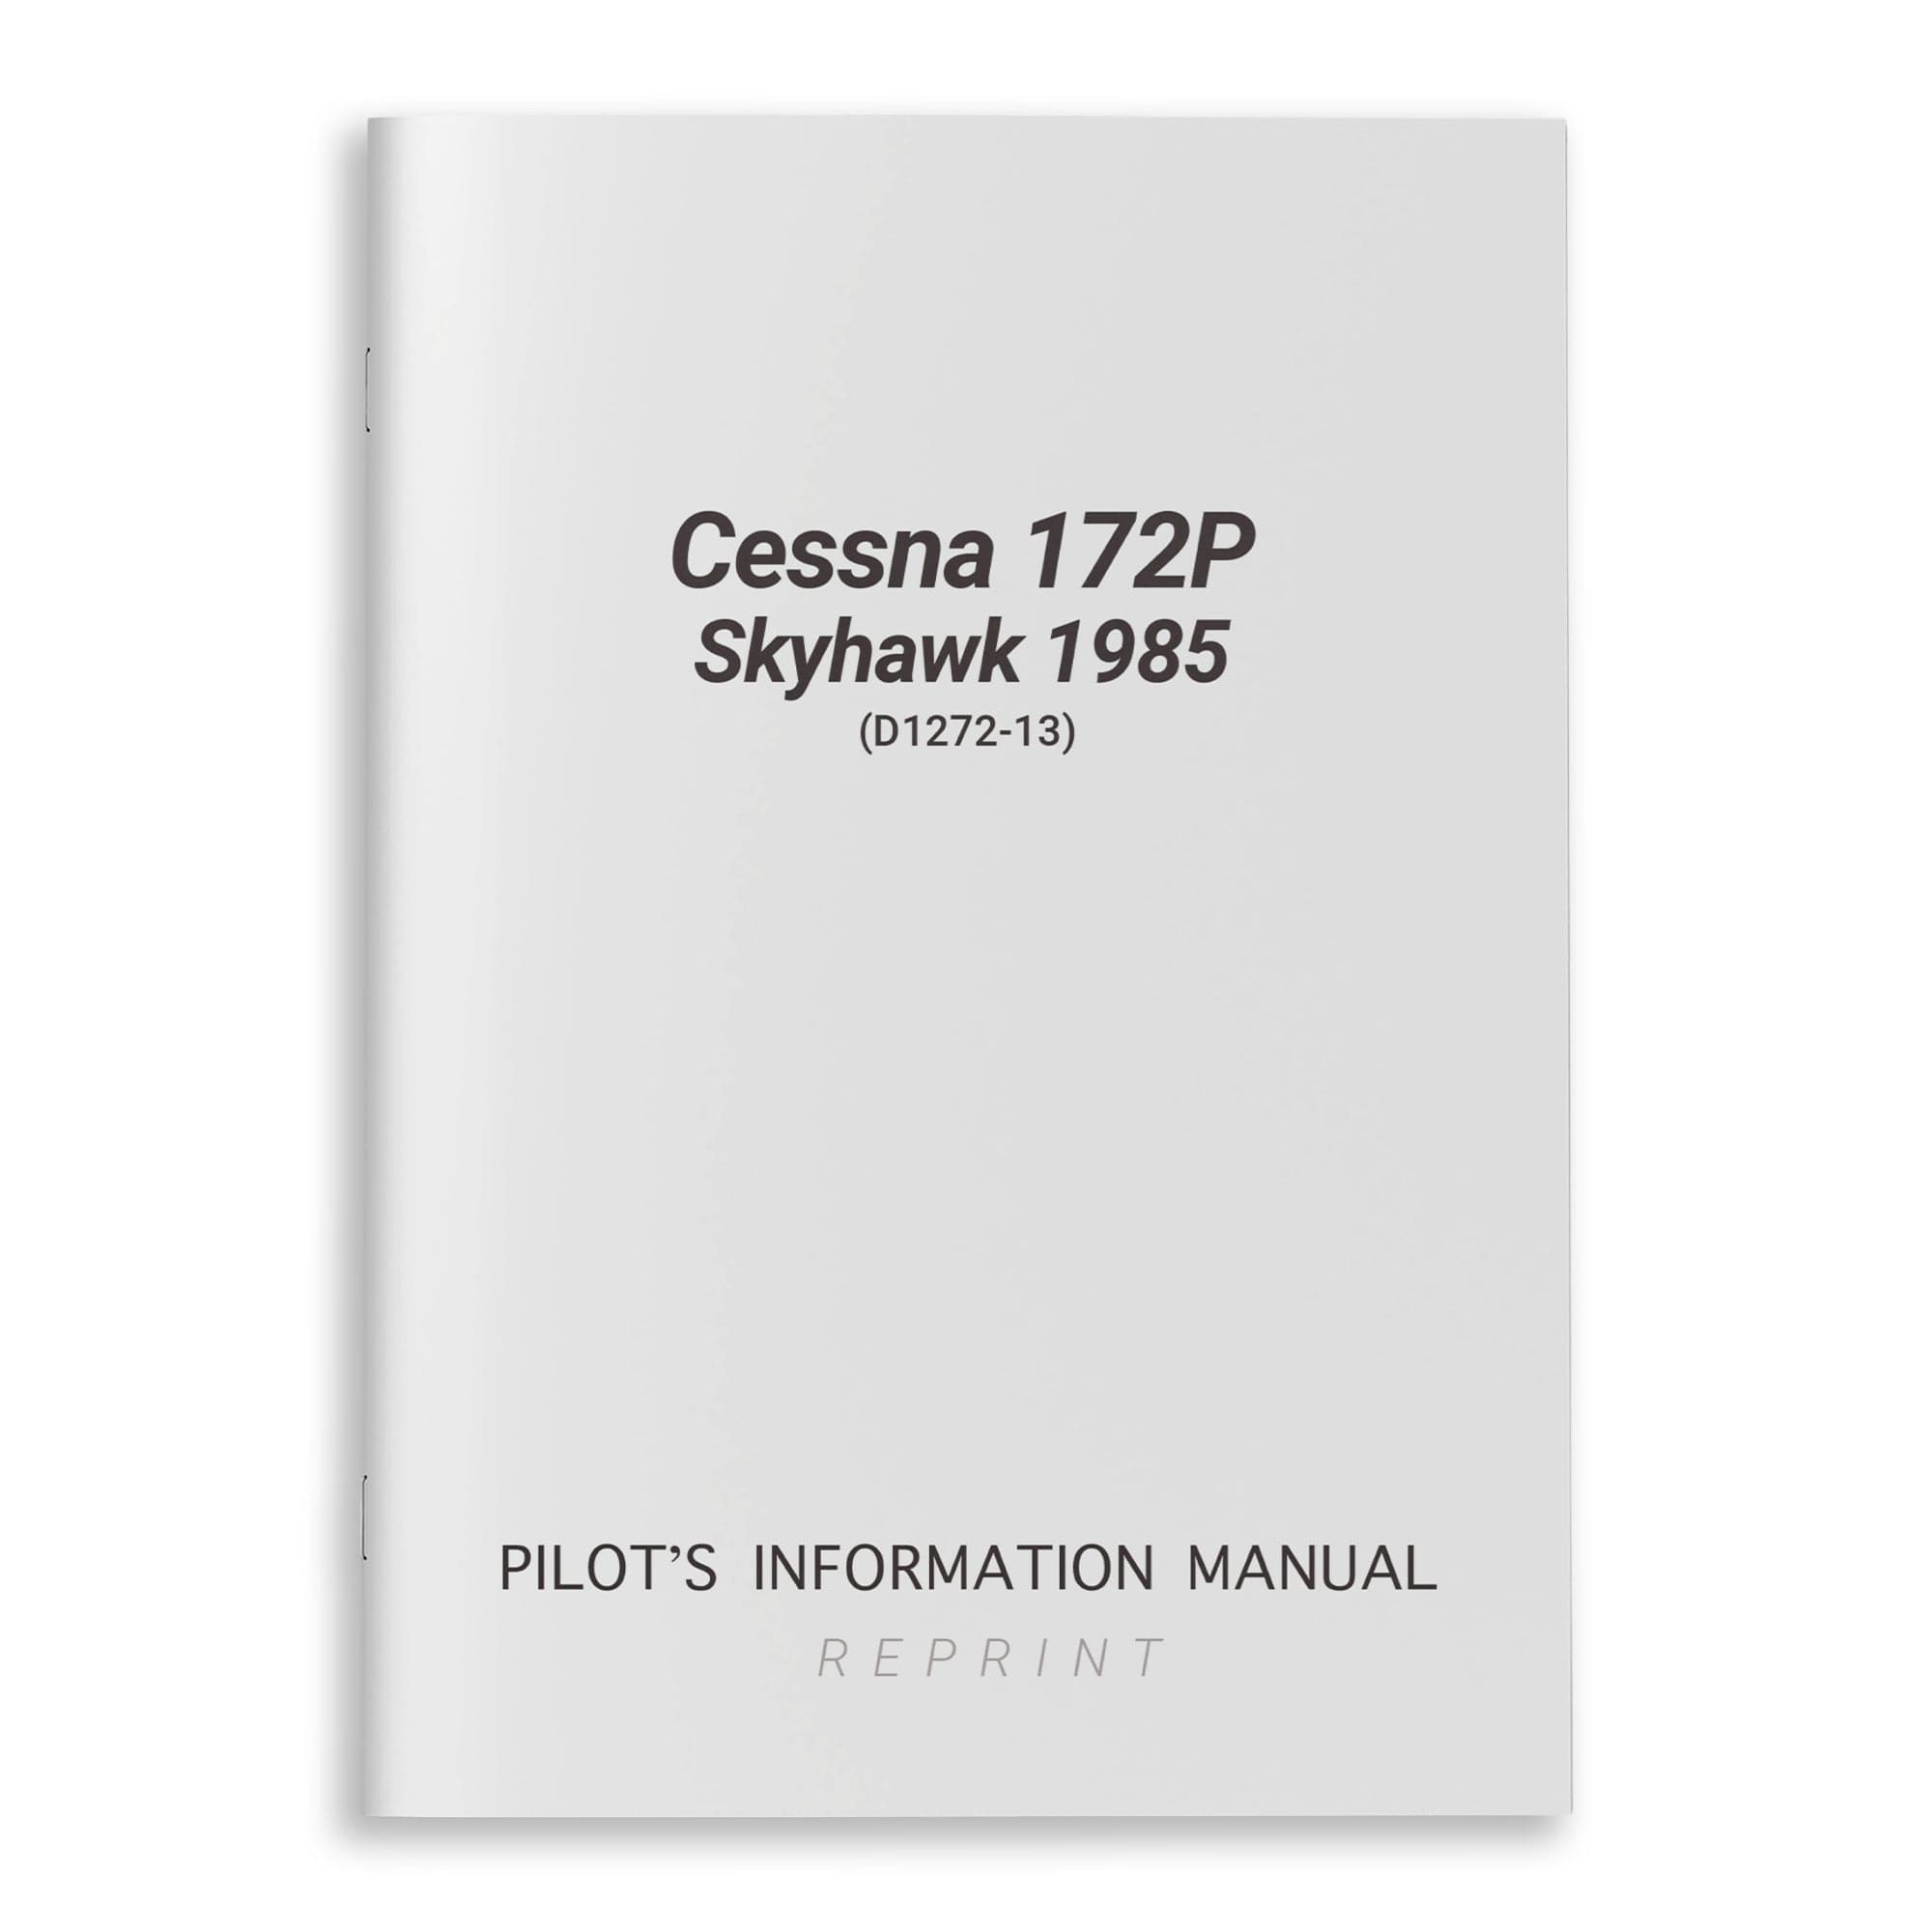 Cessna 172P Skyhawk 1985 Pilot's Information Manual (D1272-13)